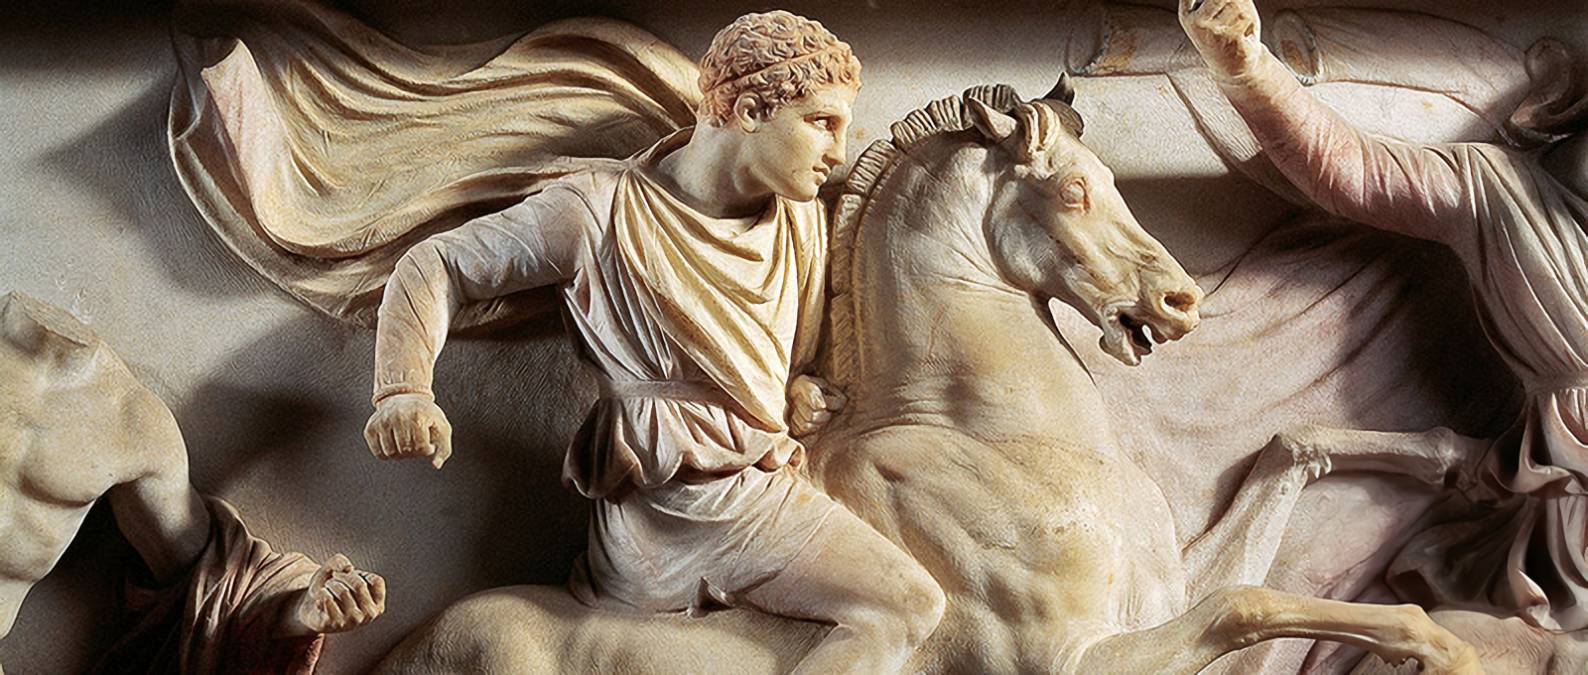 Read more about the article Ο Μέγας Αλέξανδρος: Ένας Επικός Ήρωας της Αρχαιότητας